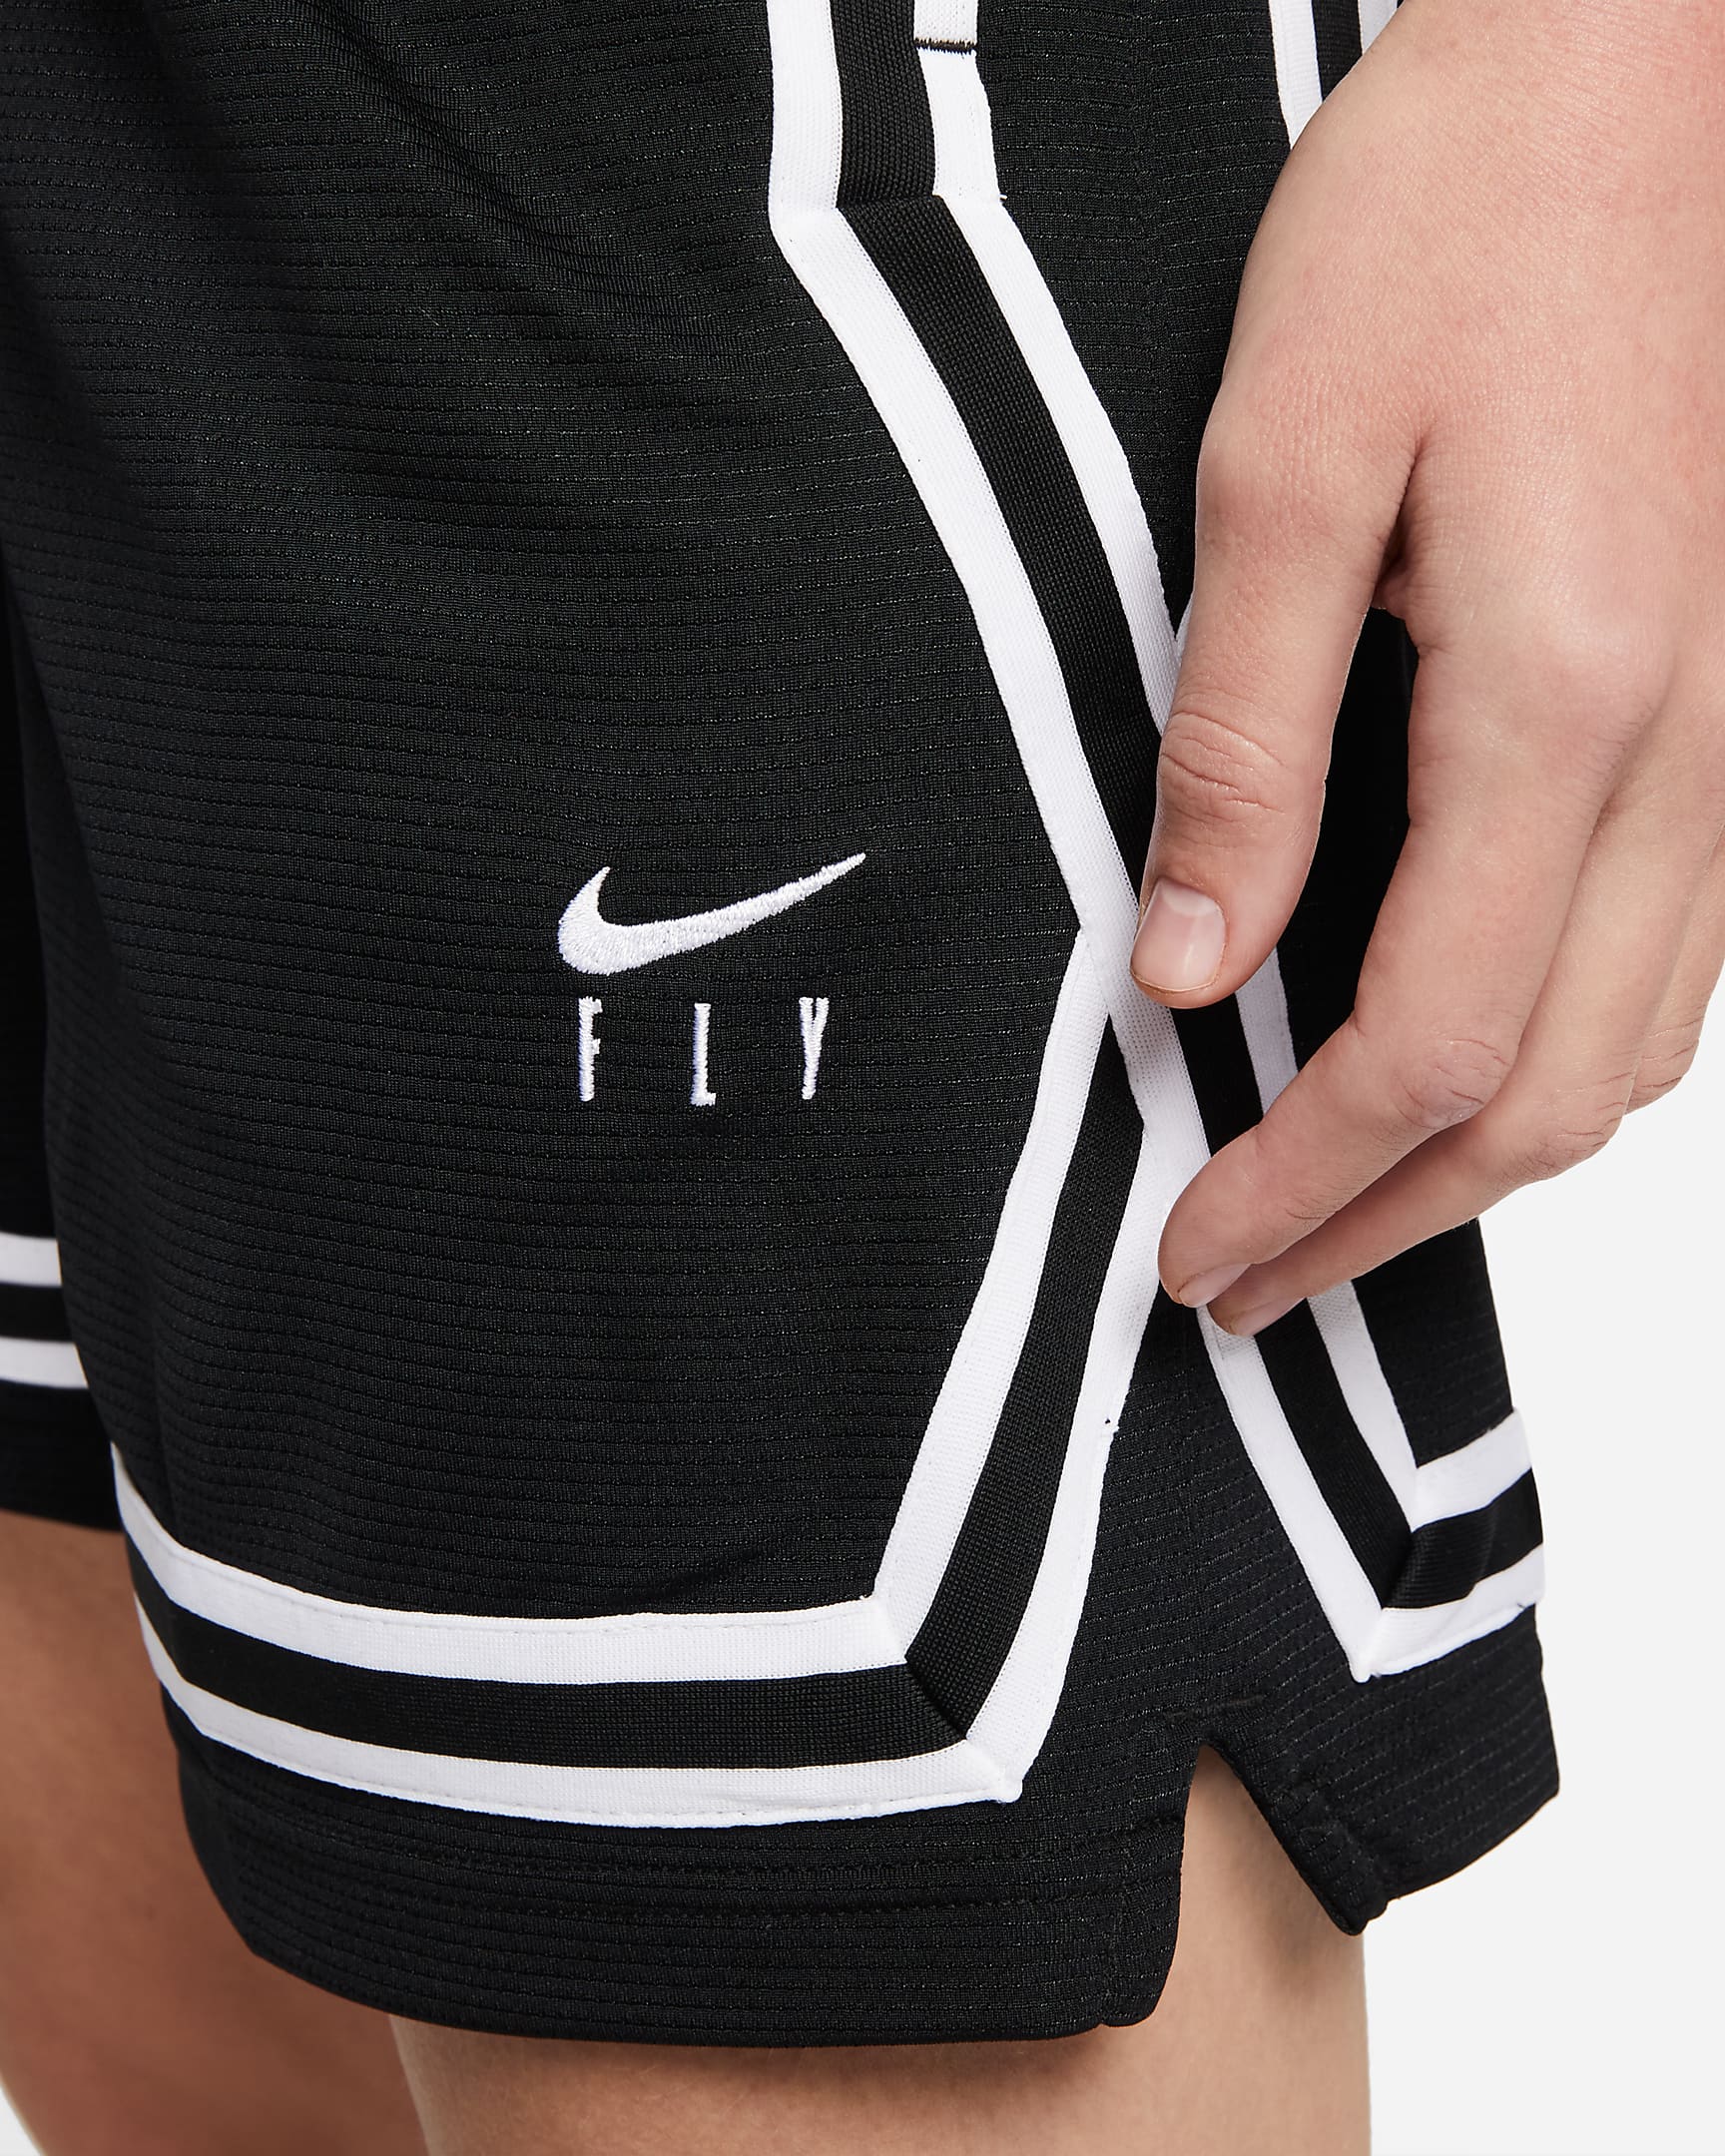 Nike Fly Crossover Women's Basketball Shorts. Nike BG